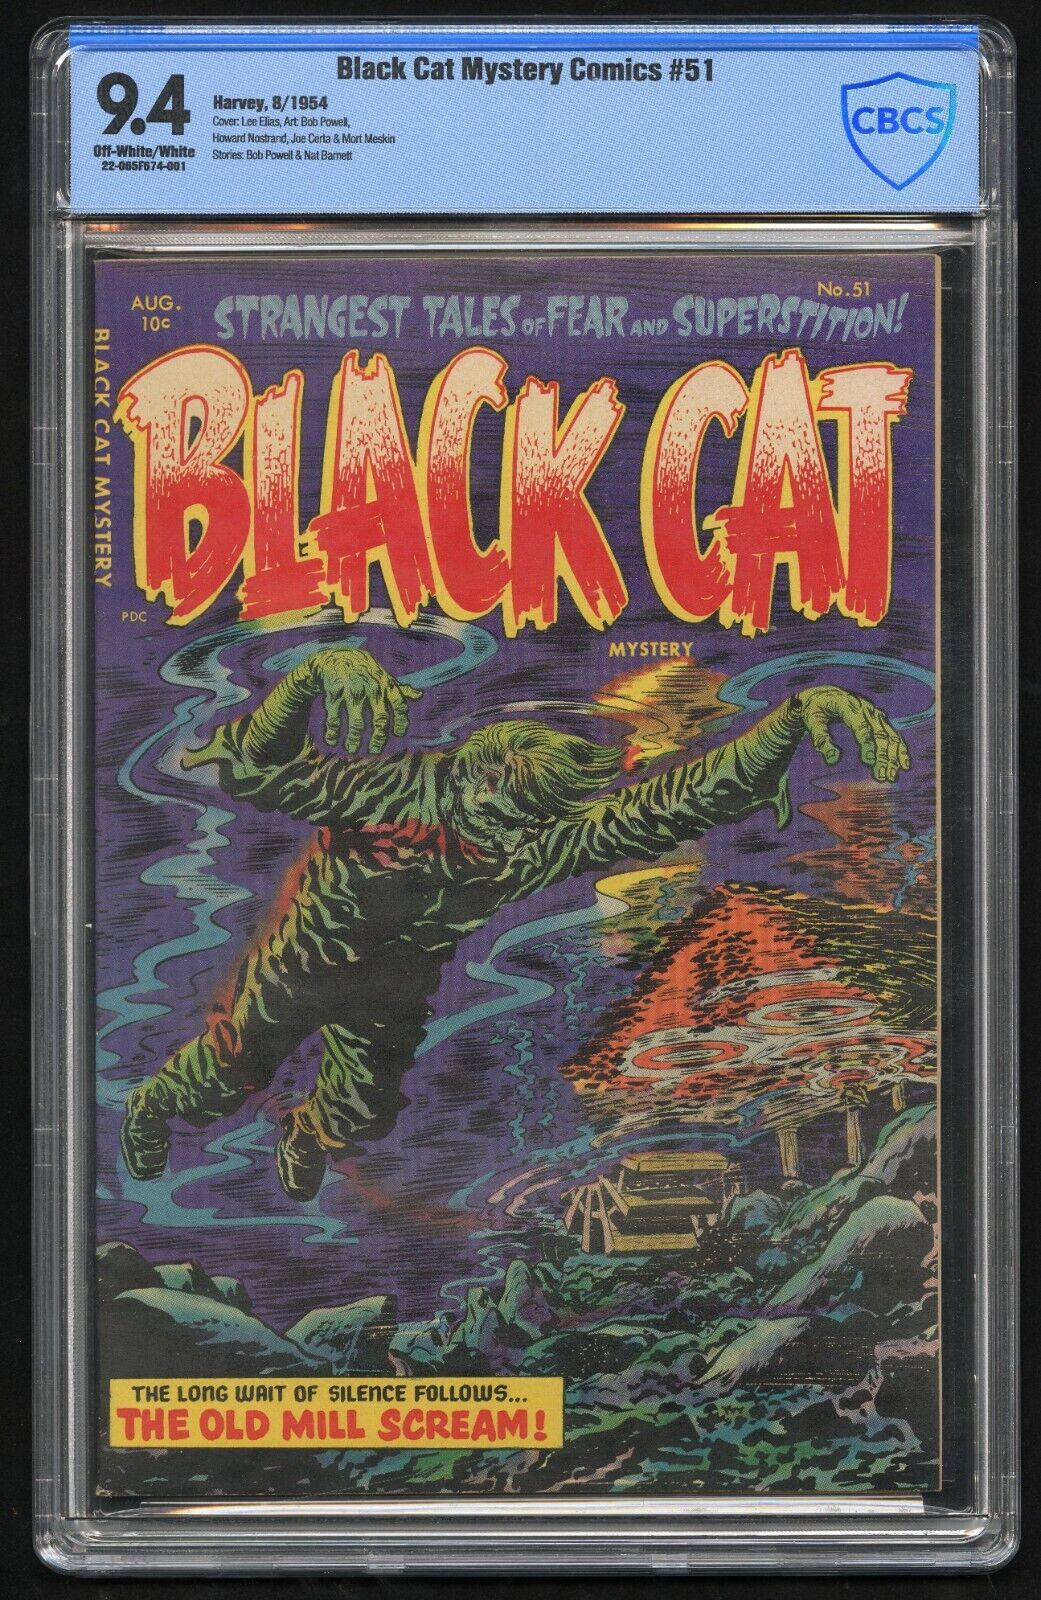 Black Cat Mystery #51 CBCS 9.4 (Harvey 8/54) Golden Age Pre-Code Horror PCH